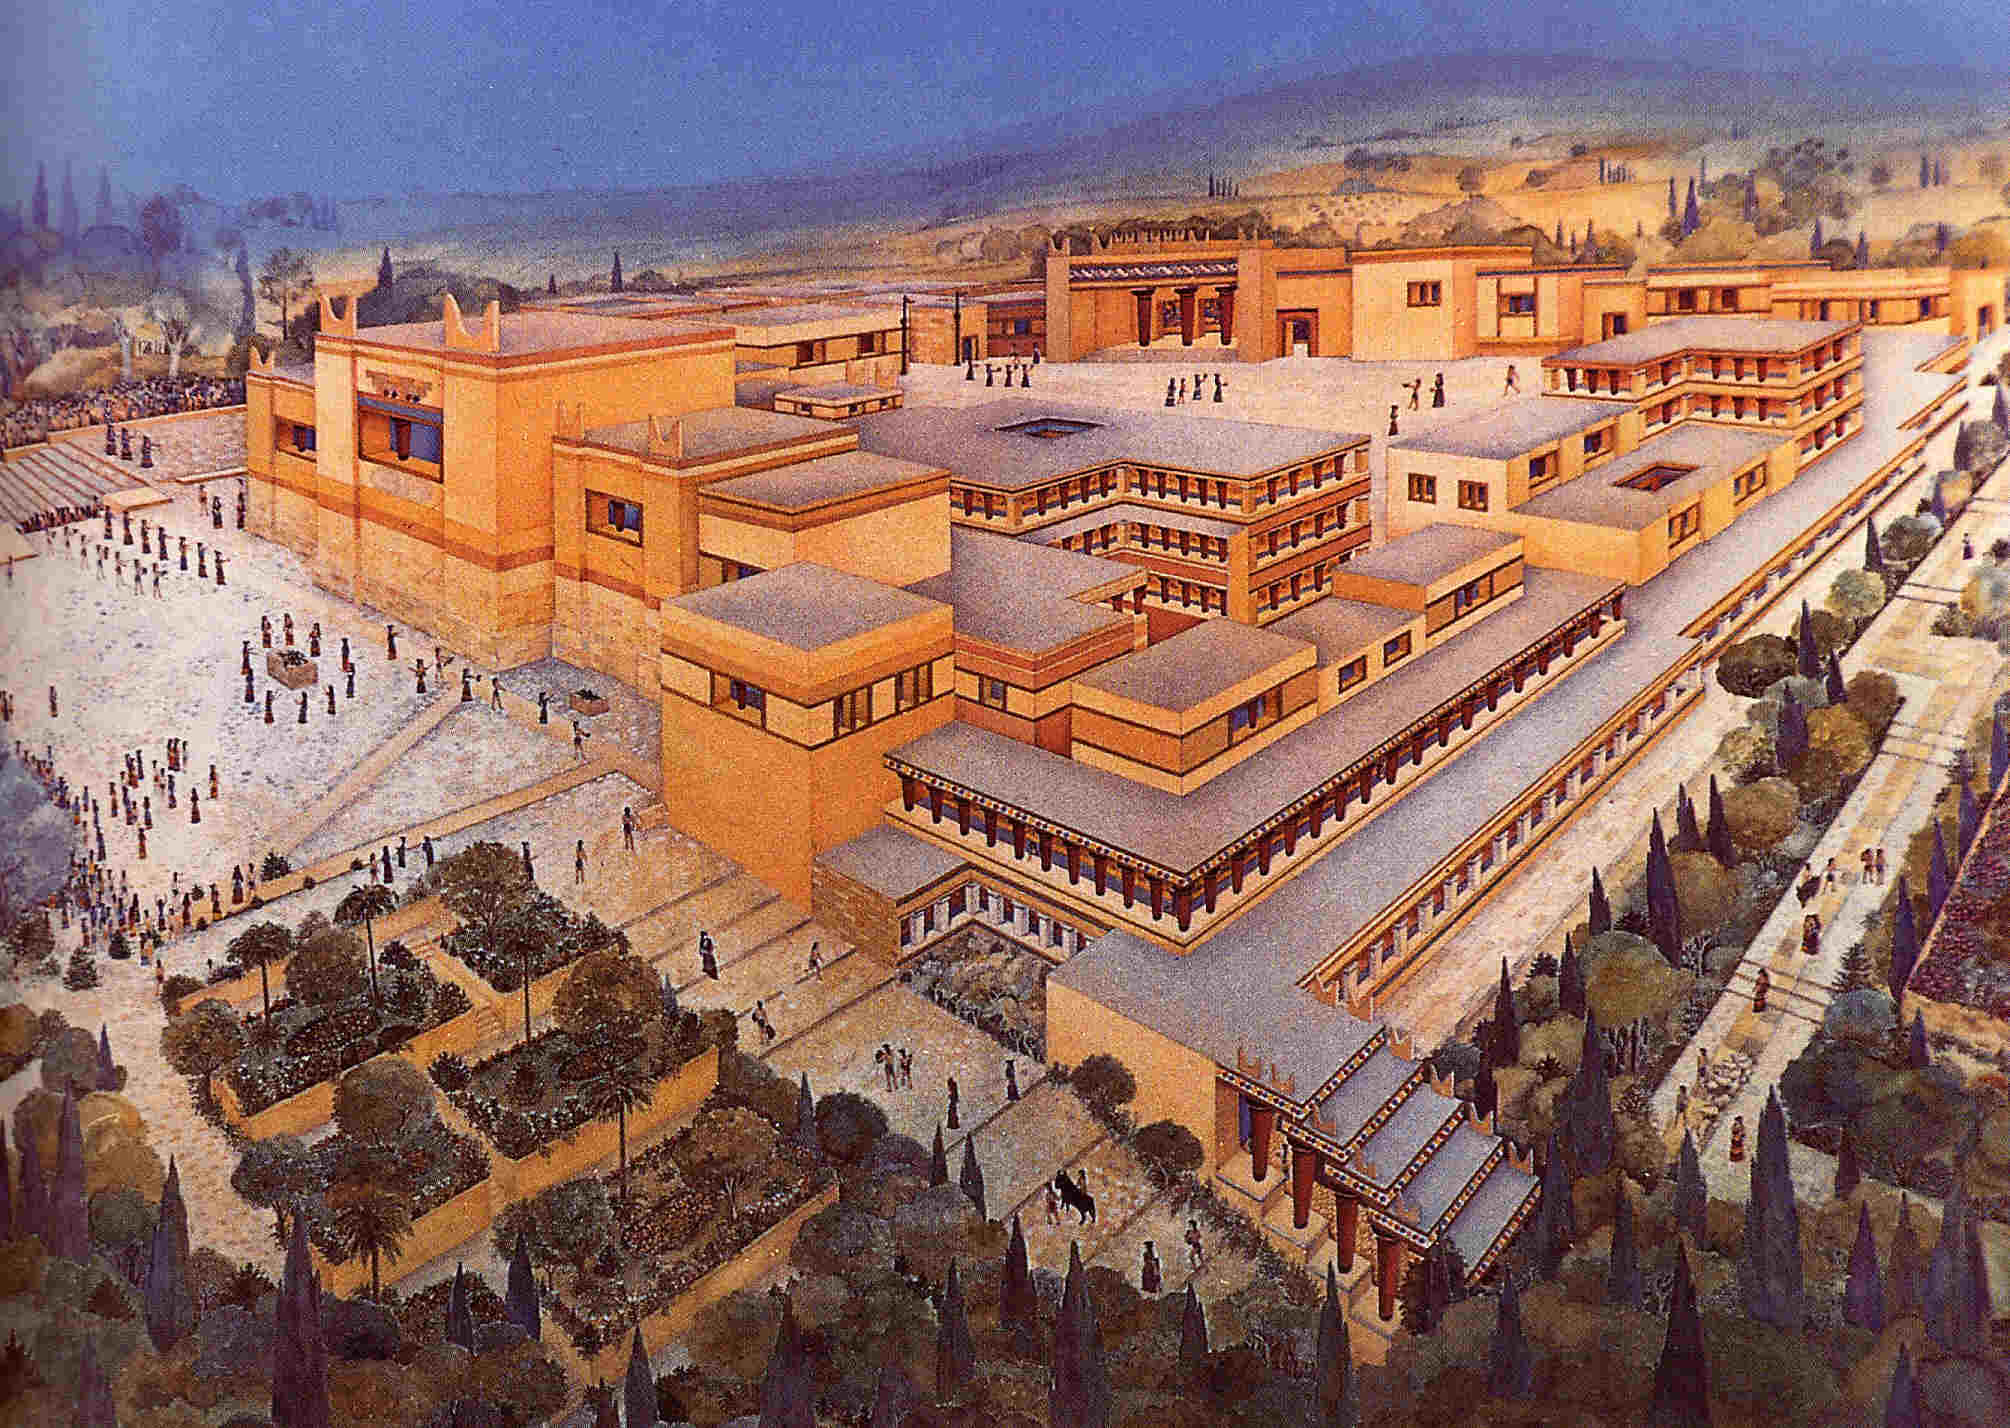 The Palace of Knossos: Amazing maze of Greece